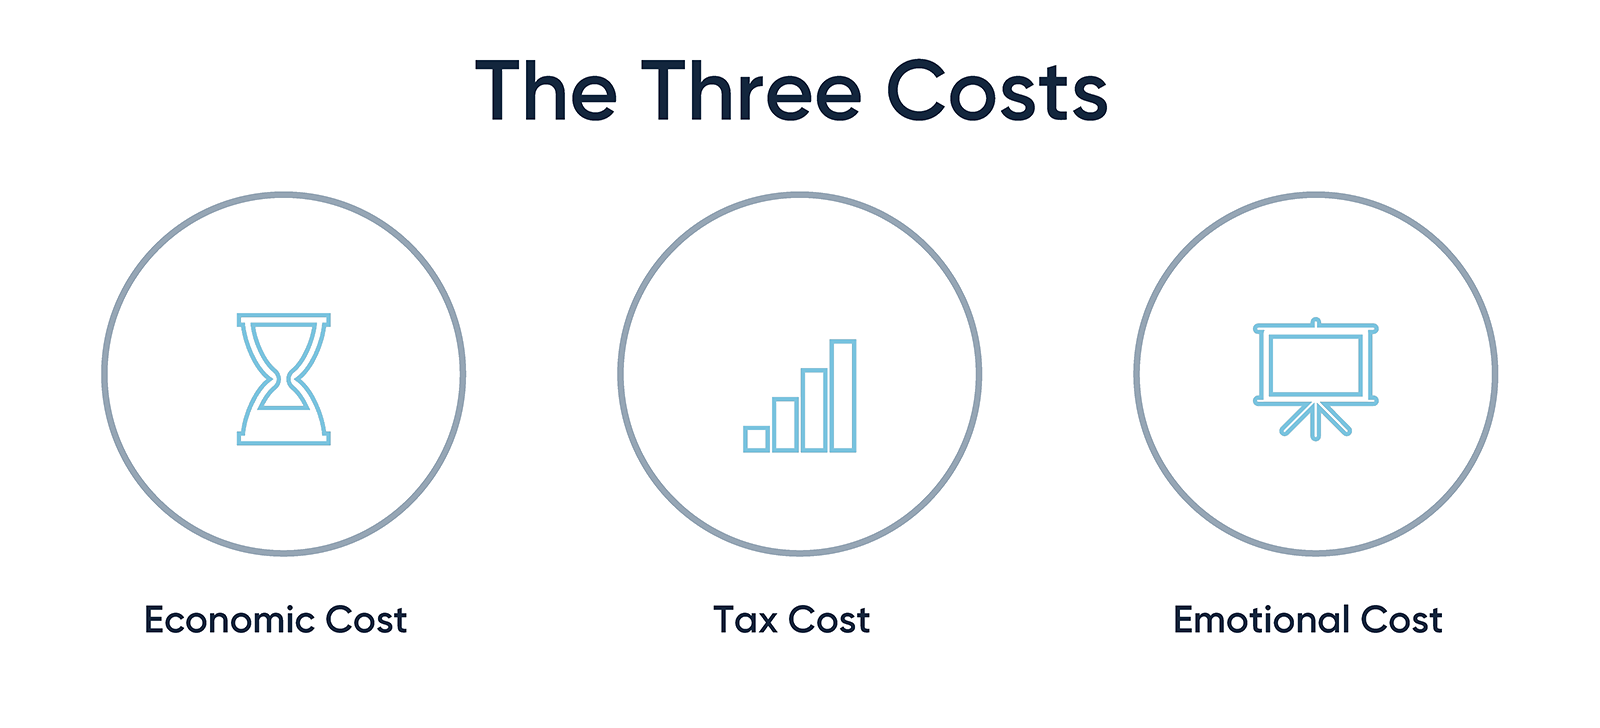 The Three Costs